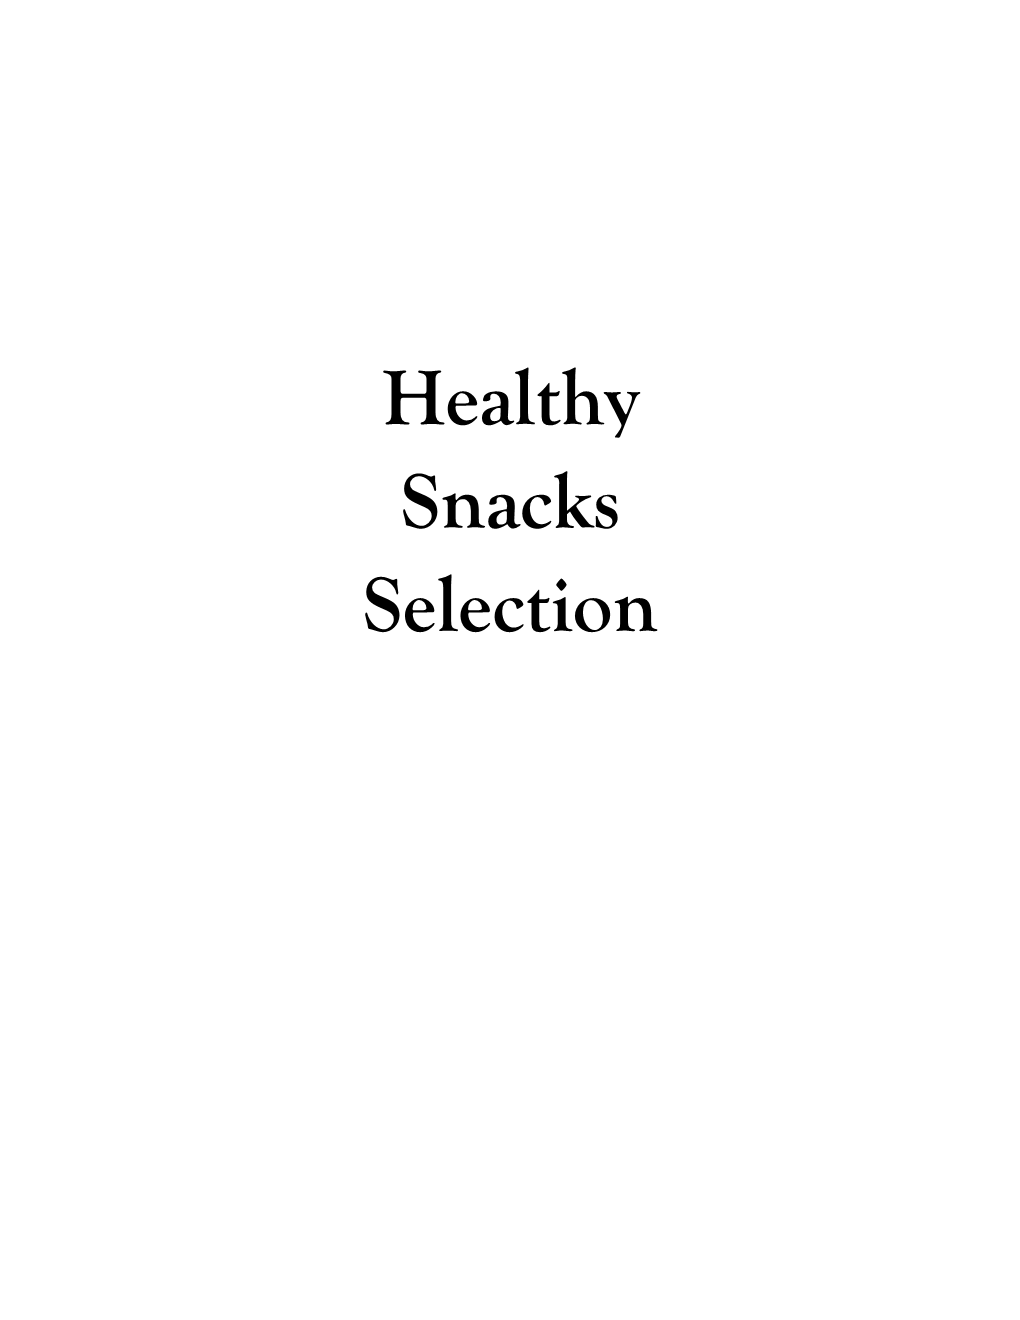 Healthy Snacks Selection SELECTING HEALTHY SNACKS +